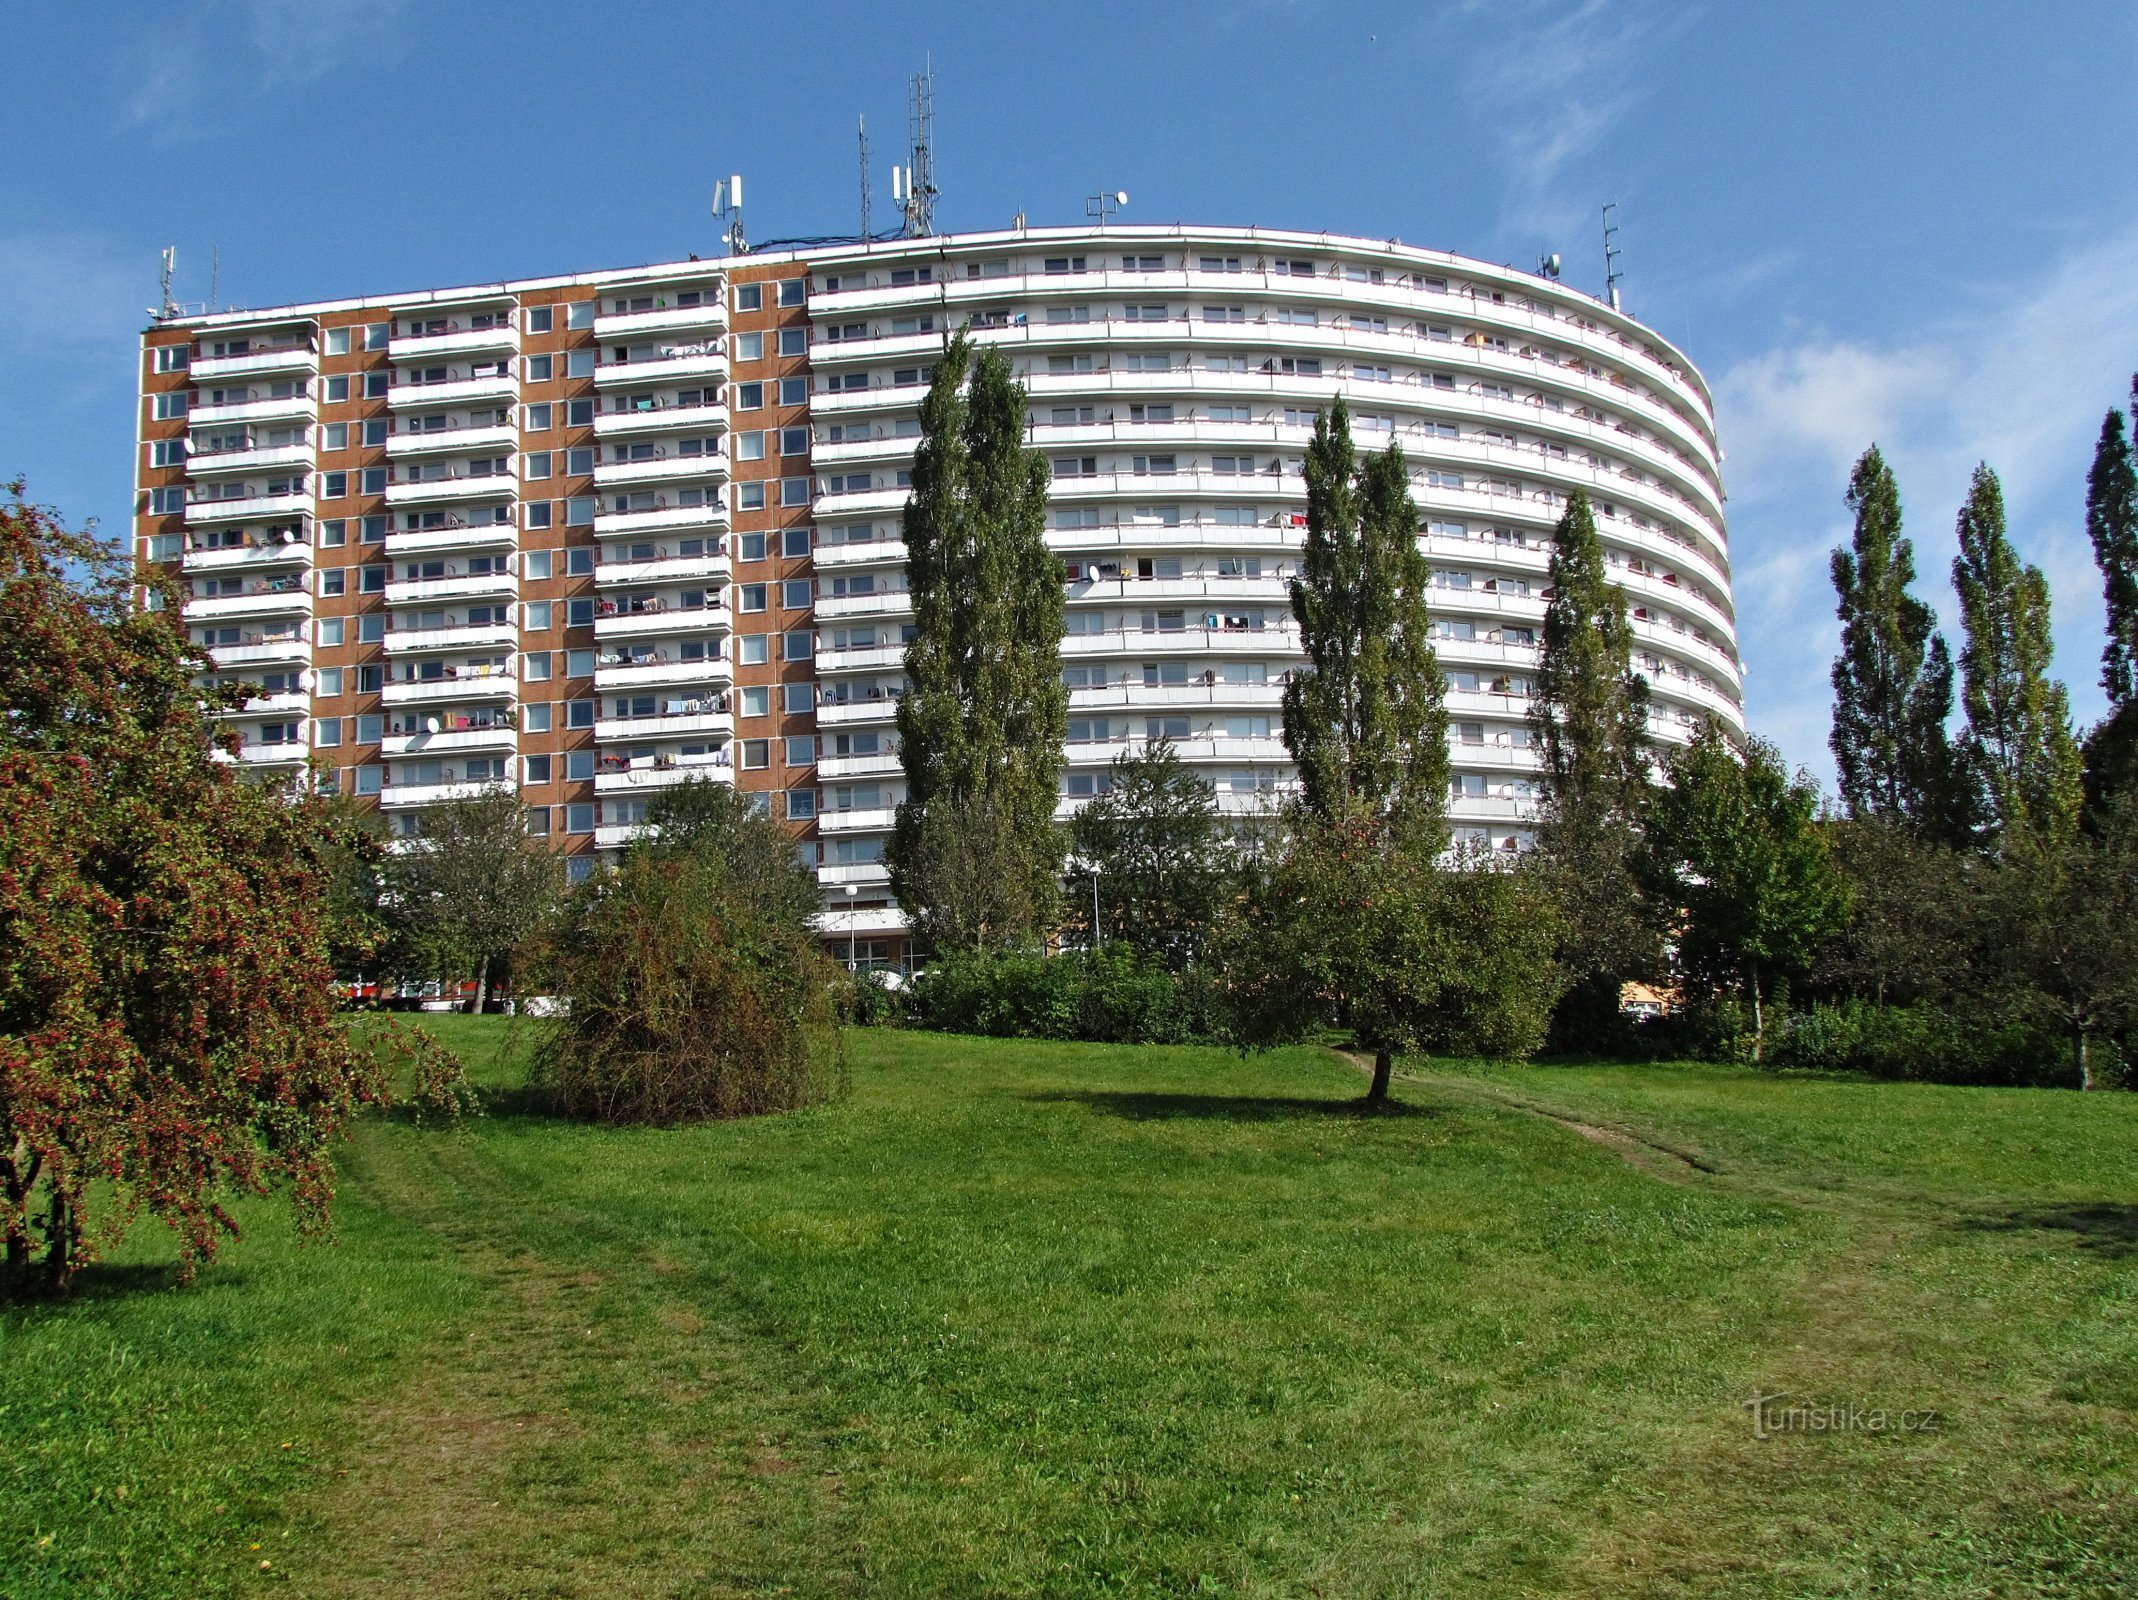 Zlín - Parco Centrale